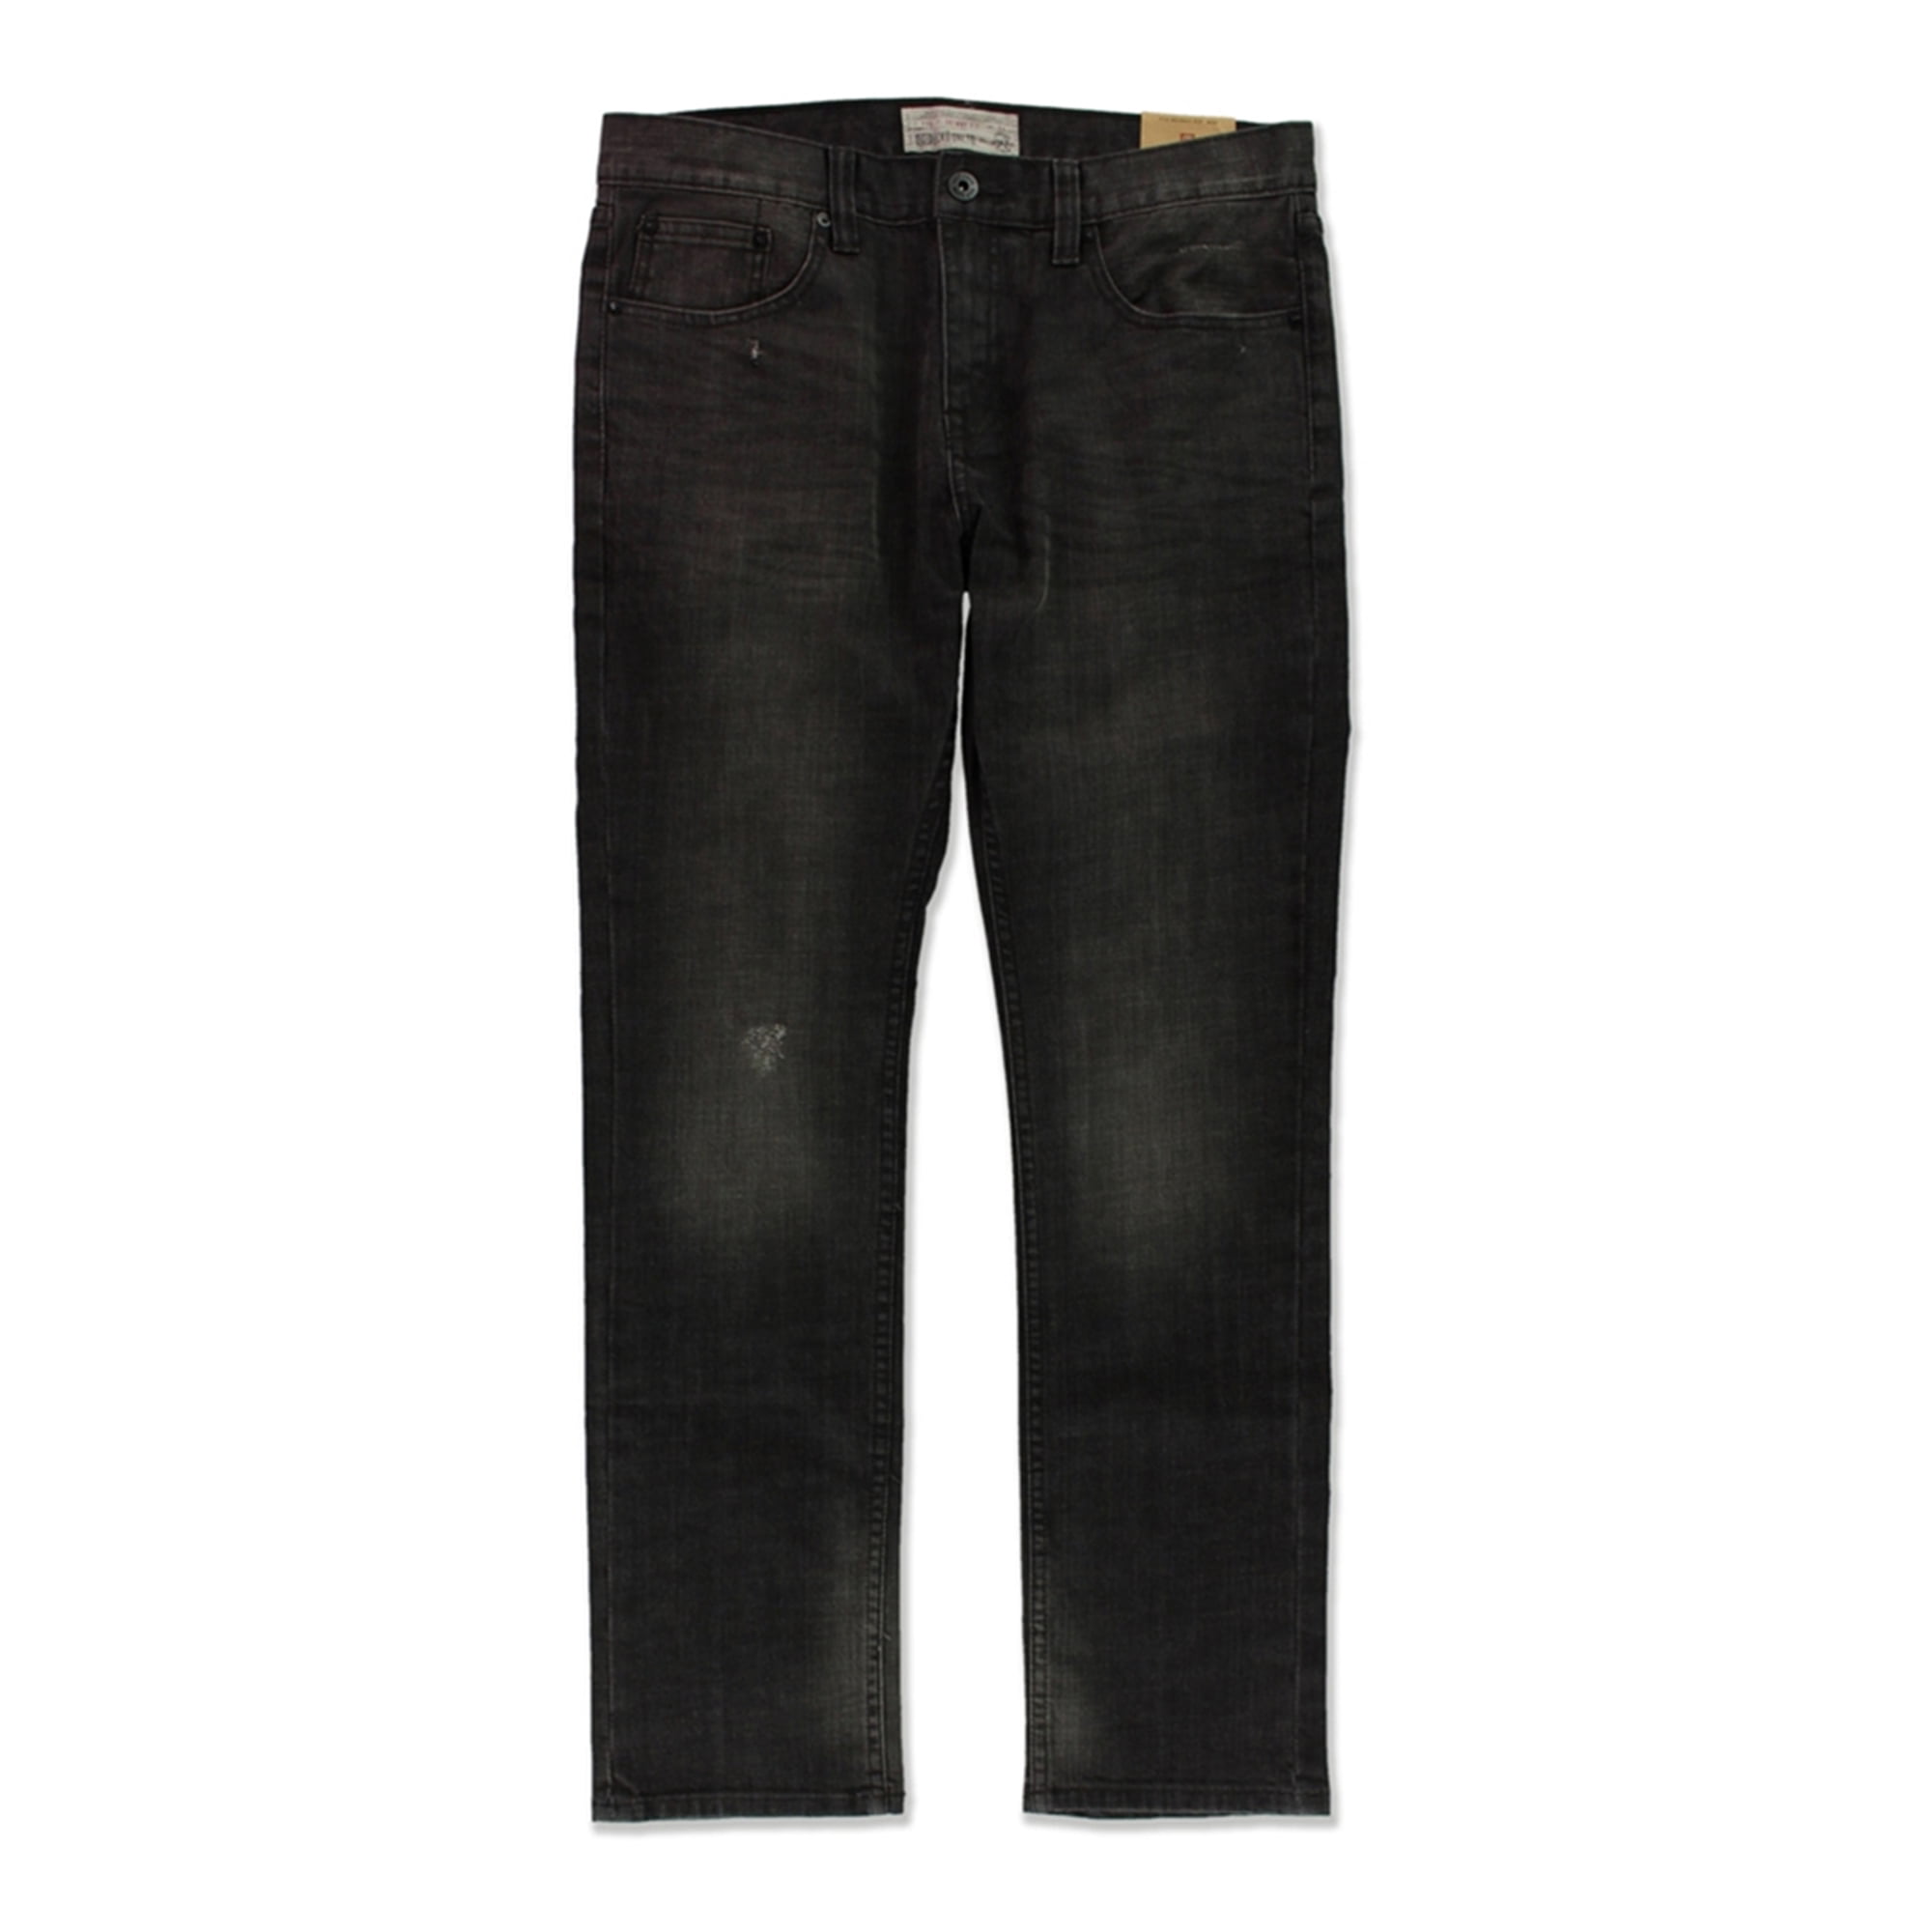 Ecko Unltd Mens 710 $60 Deep Rinse Skinny Slim Fit Denim Jeans Choose Size 